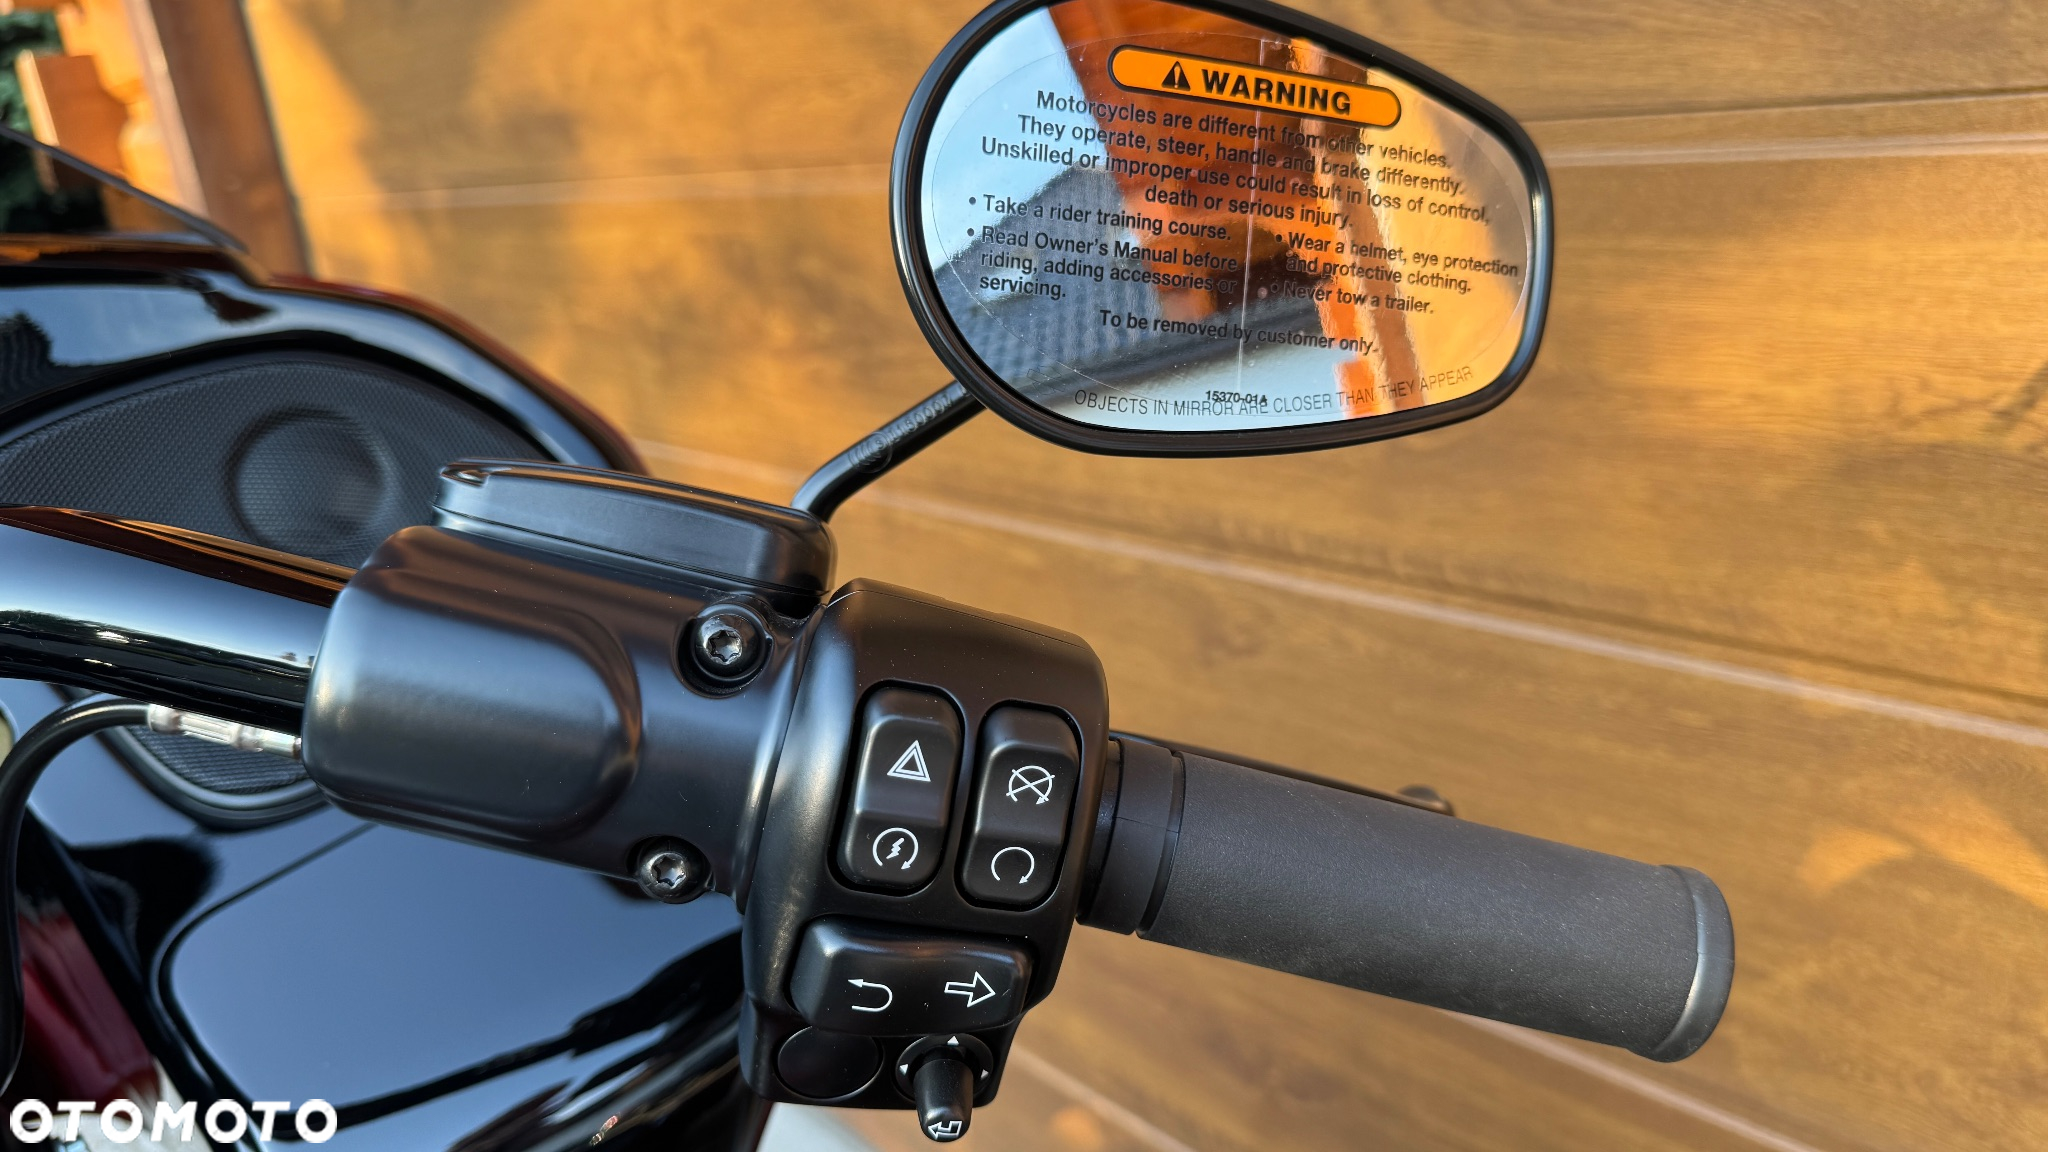 Harley-Davidson Touring Road Glide - 9